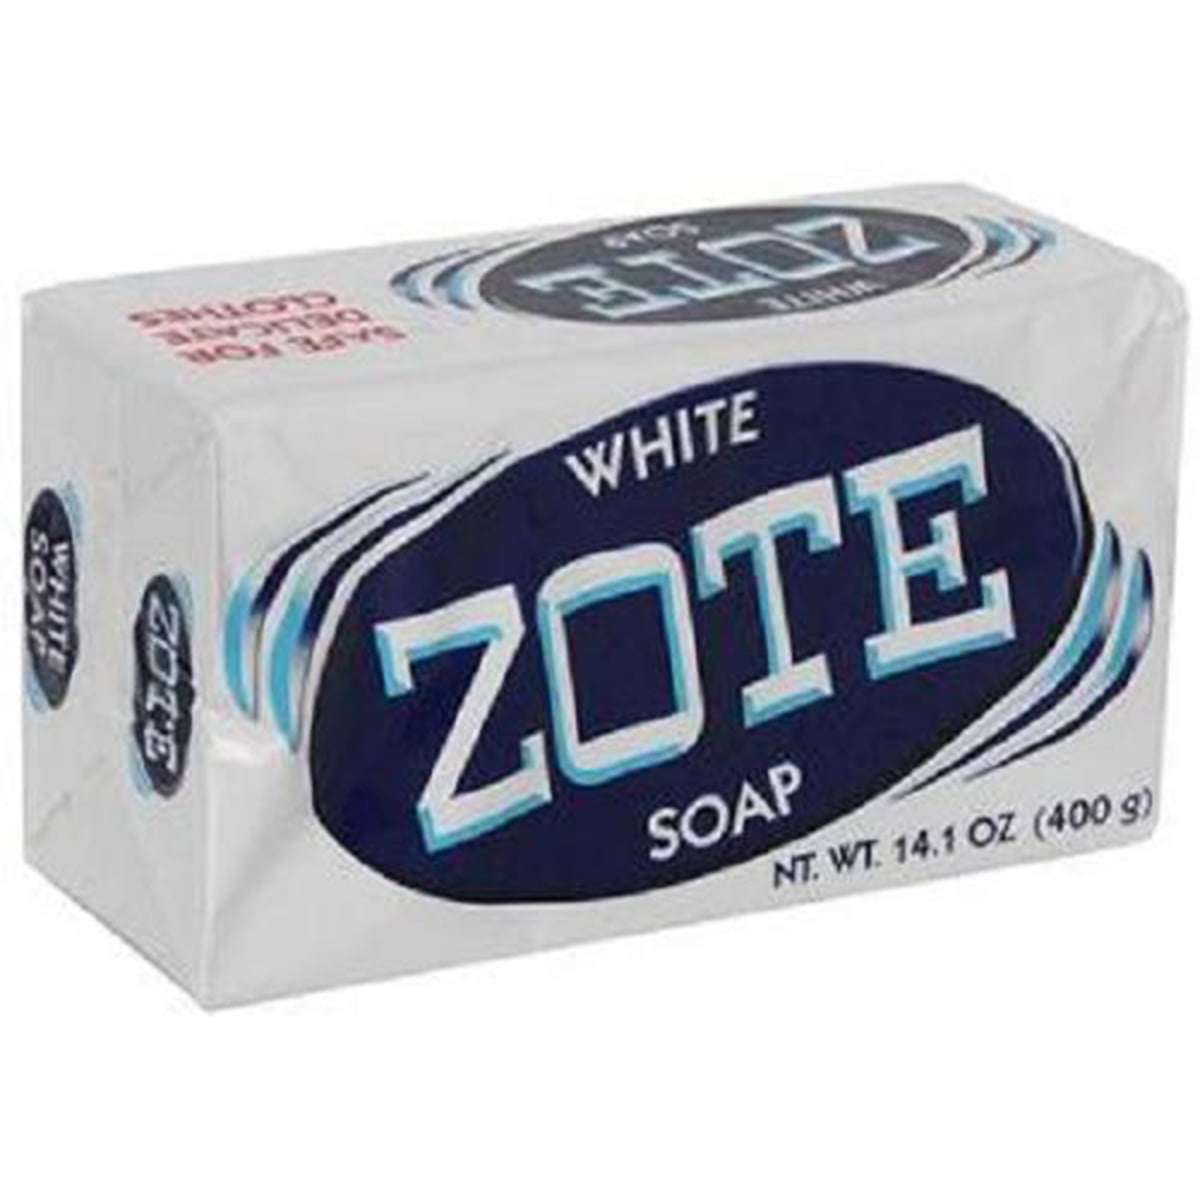 Jabon Zote Blanco Laundry Flakes Pack of 2 